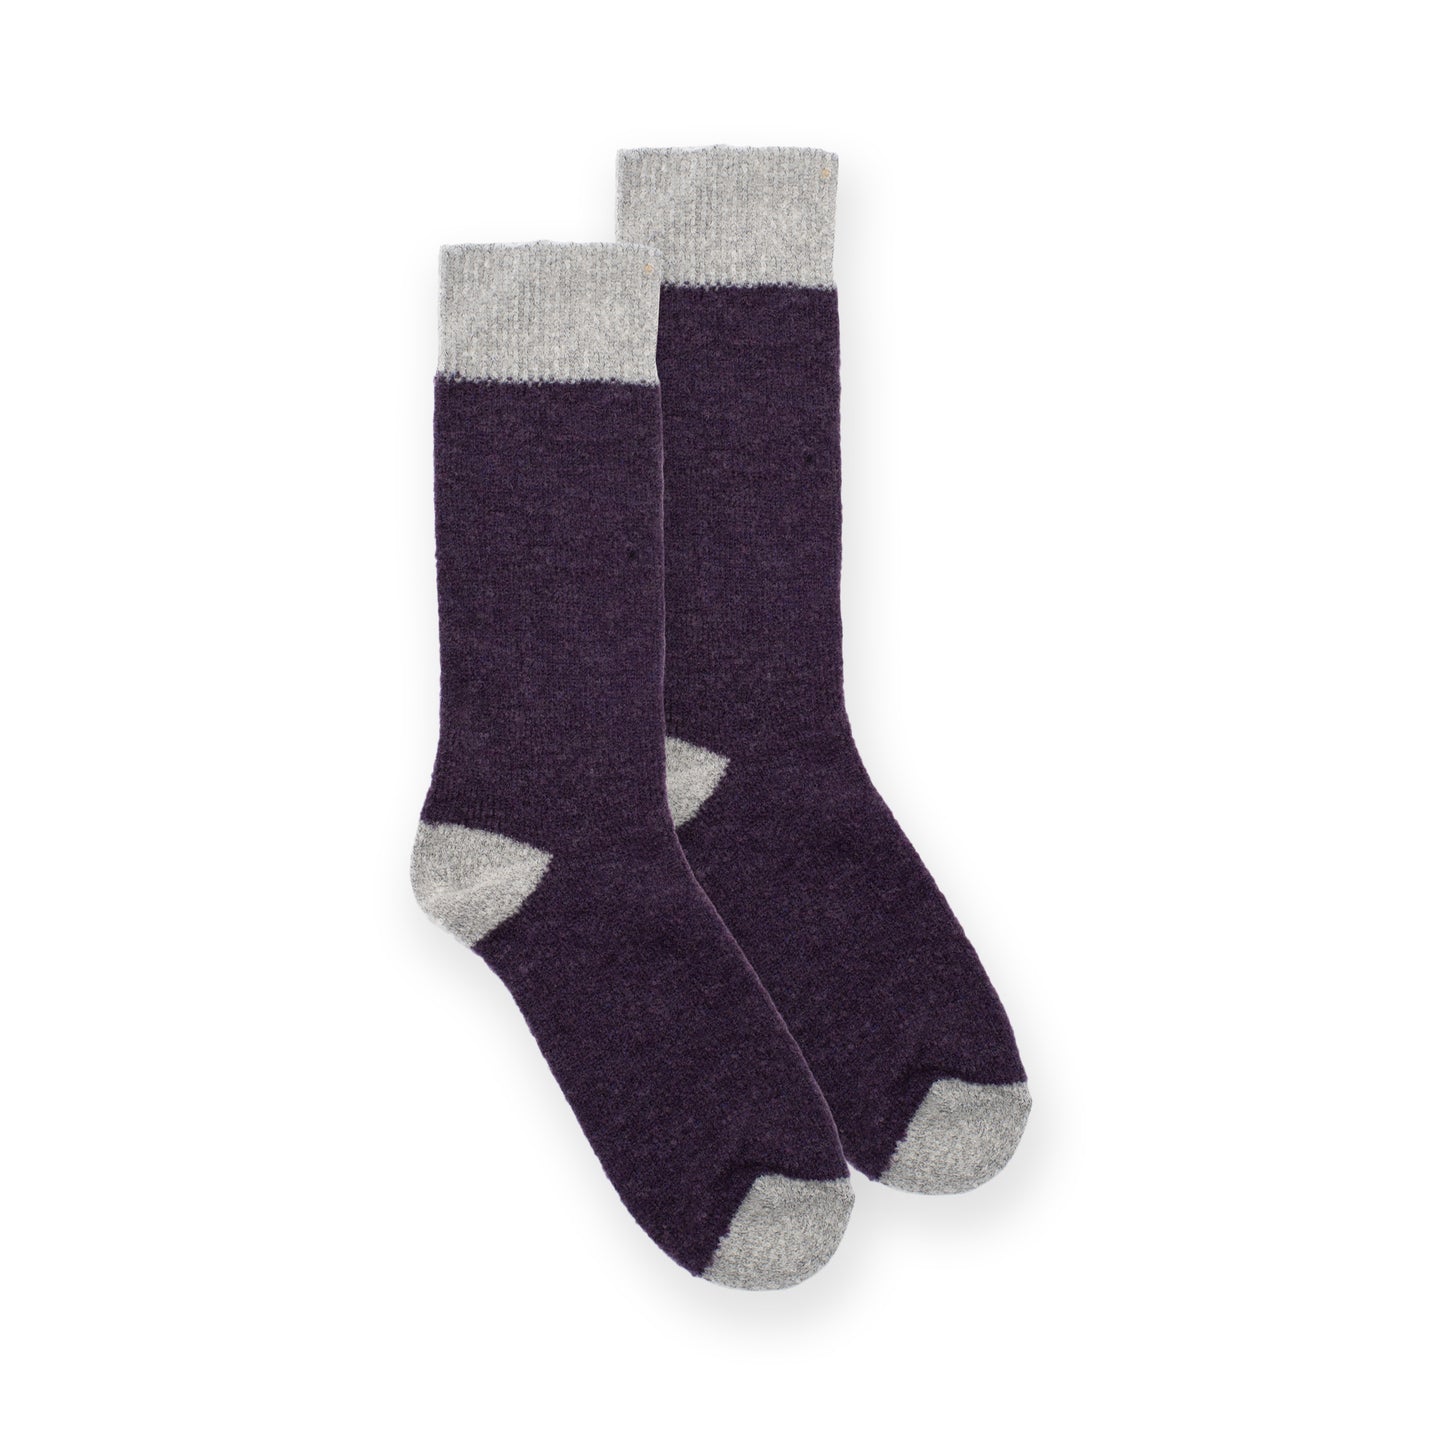 Socks plum - grey